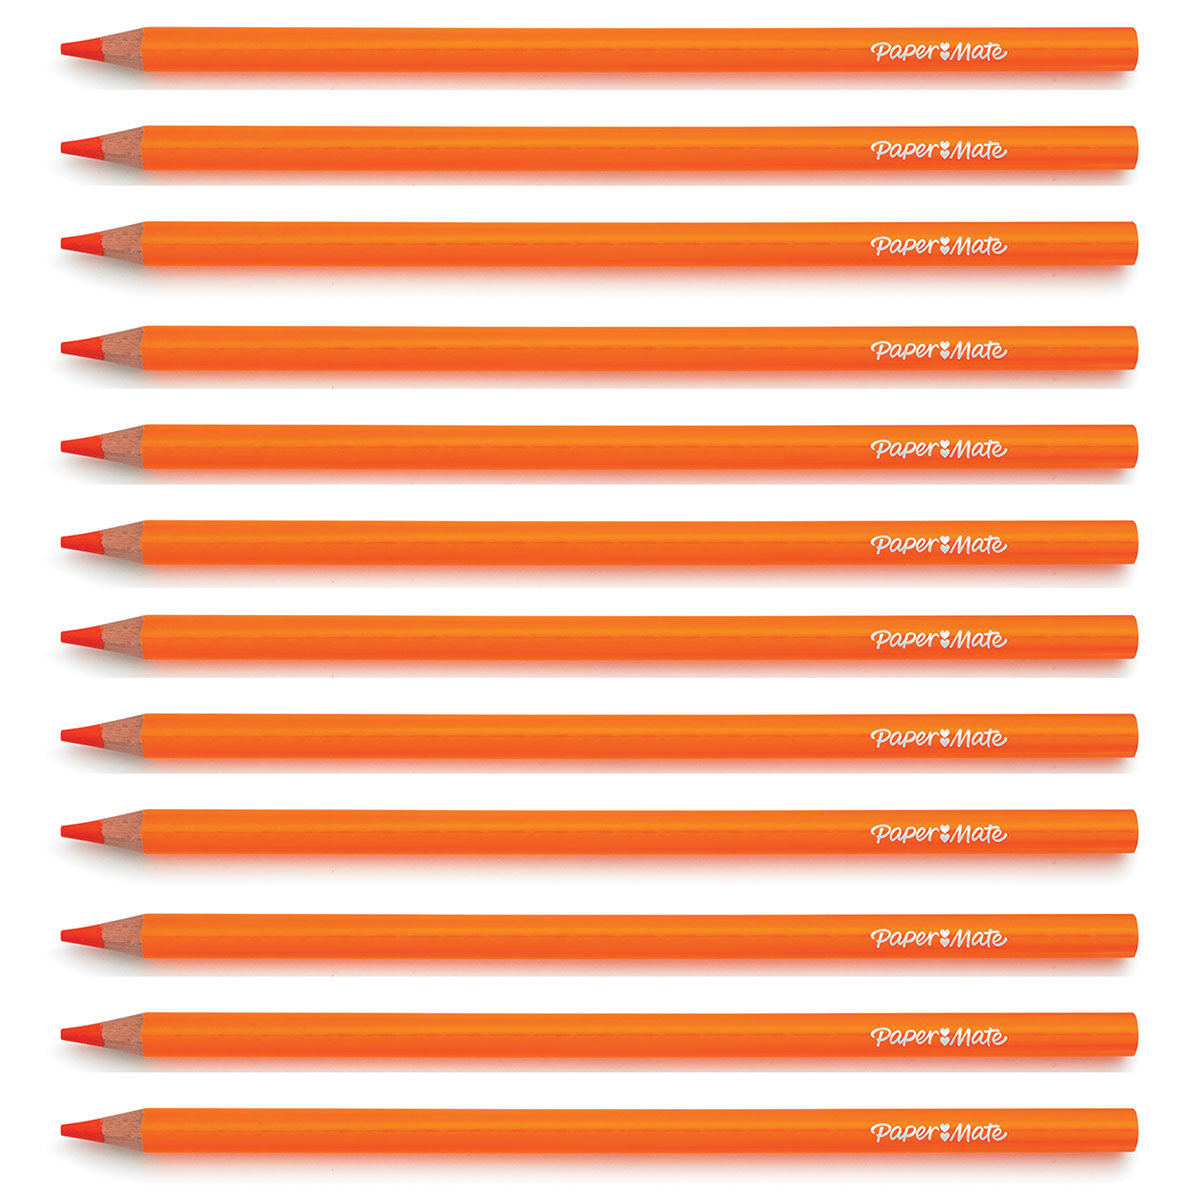 Paper Mate Colored Pencils Orange Pack of 12 (Writes Orange)  Paper Mate Pencils